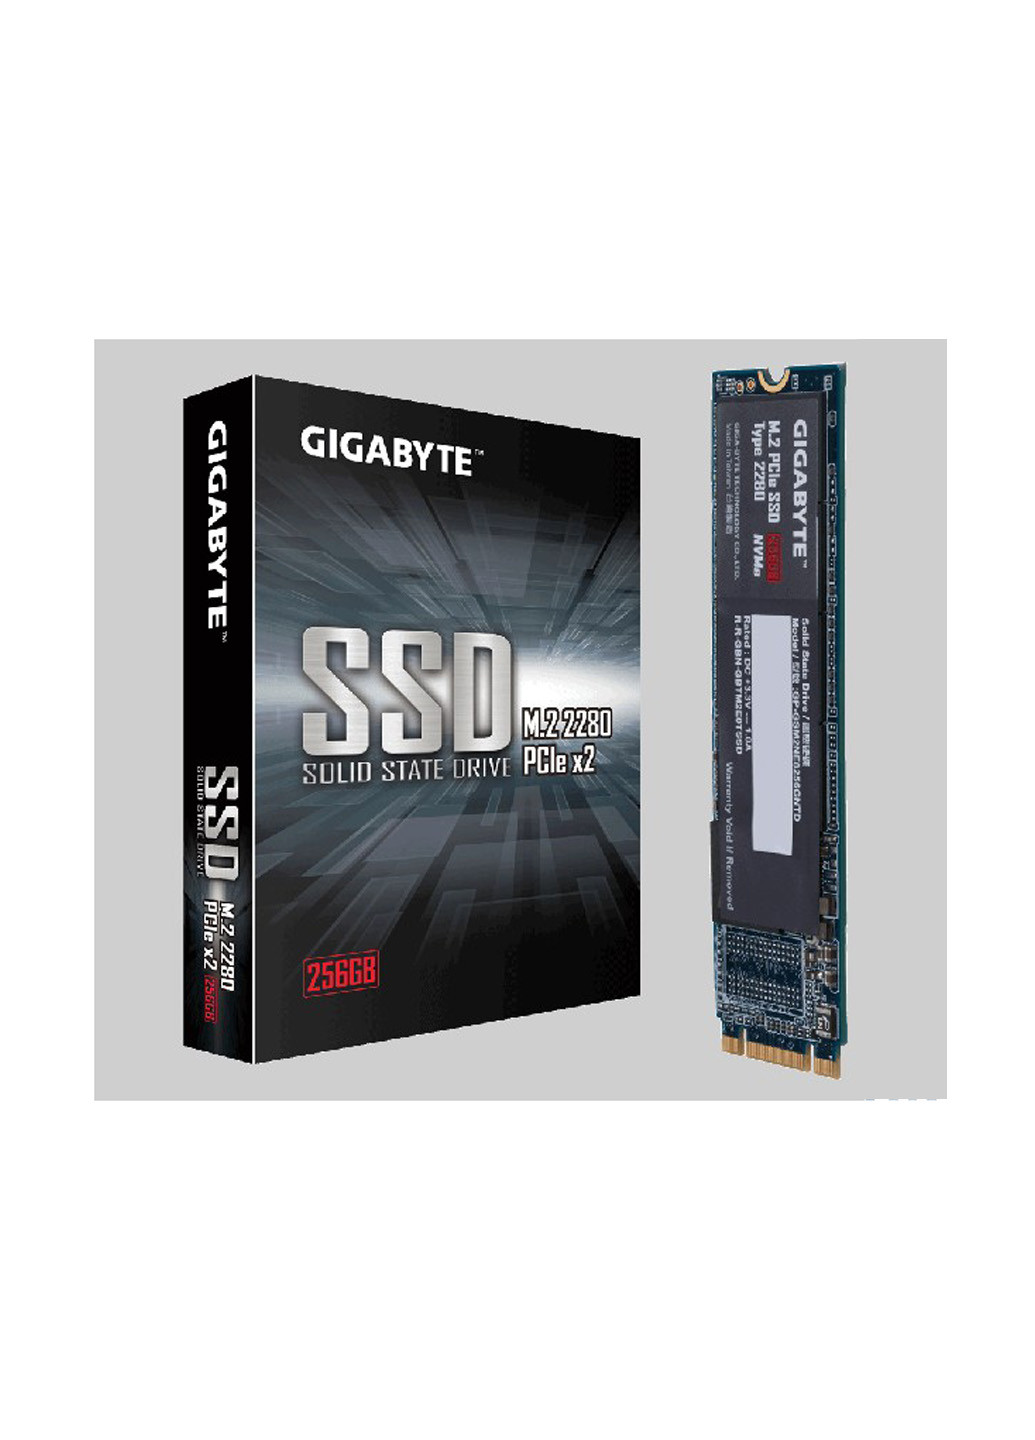 Внутренний SSD 256GB M.2 2280 NVMe PCIe 3.0 x2 NAND TLC (GP-GSM2NE8256GNTD) Gigabyte внутренний ssd gigabyte 256gb m.2 2280 nvme pcie 3.0 x2 nand tlc (gp-gsm2ne8256gntd) (136894024)